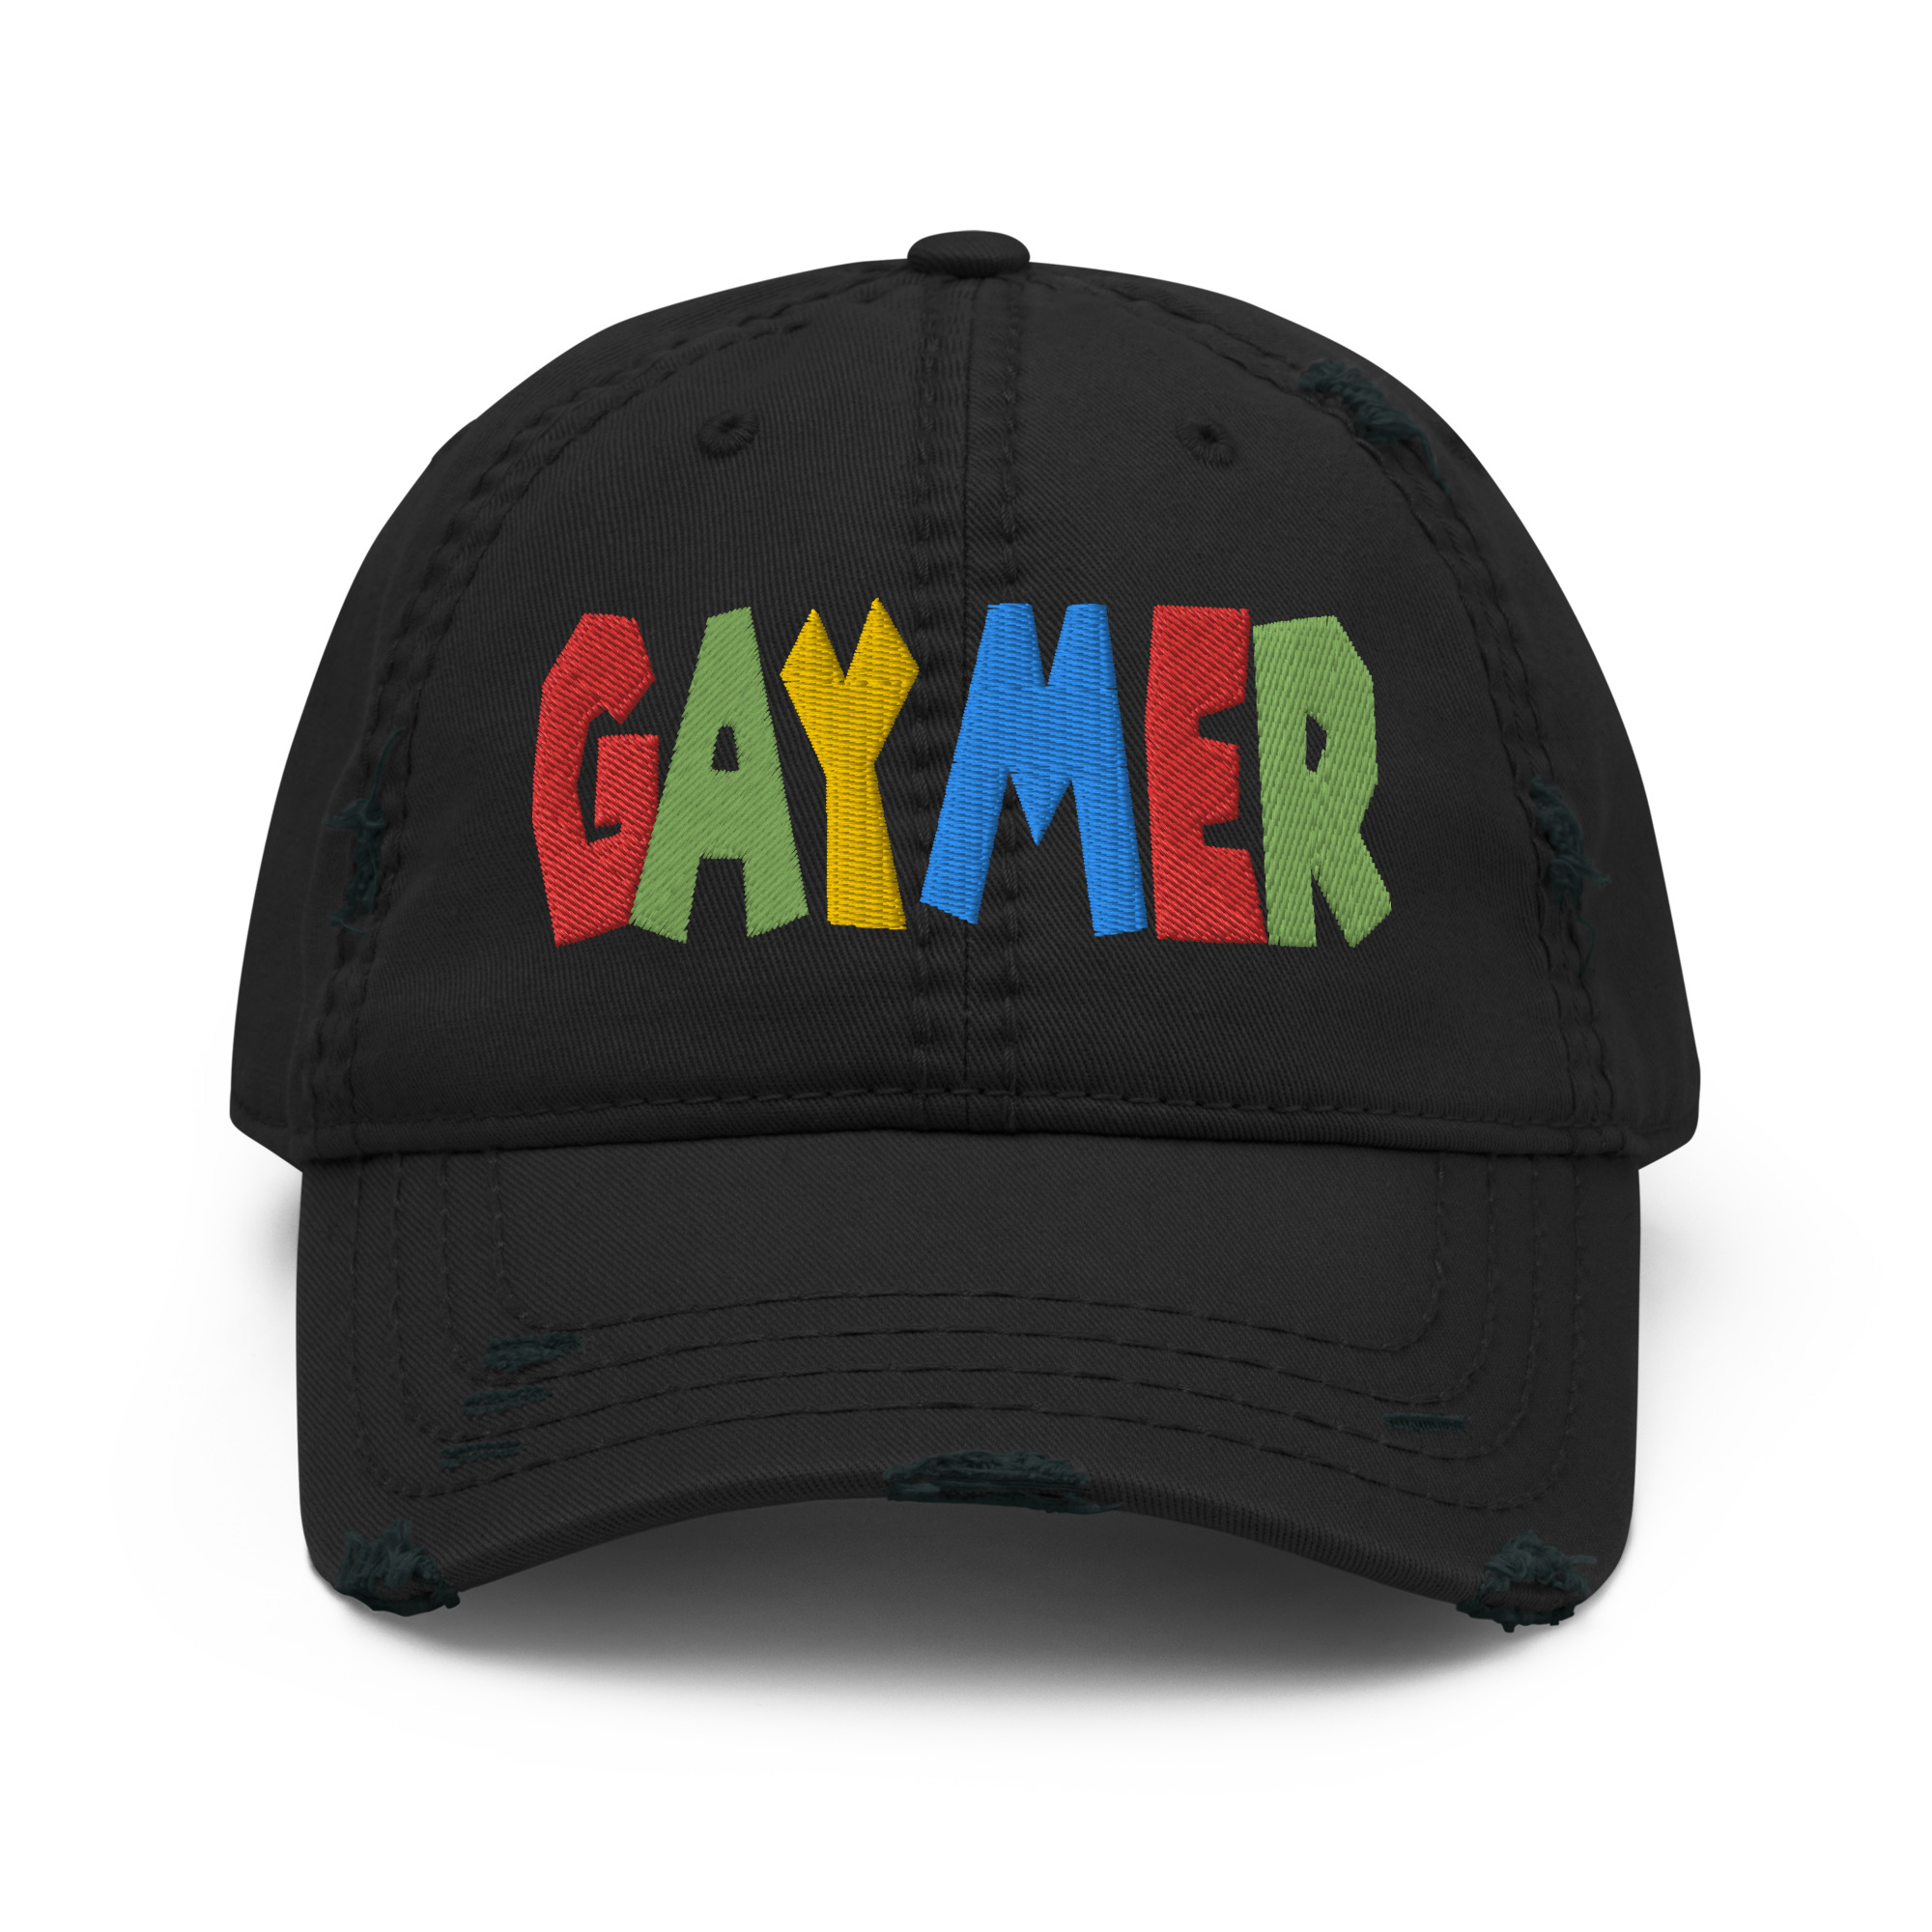 GAYMER - Distressed Dad Hat